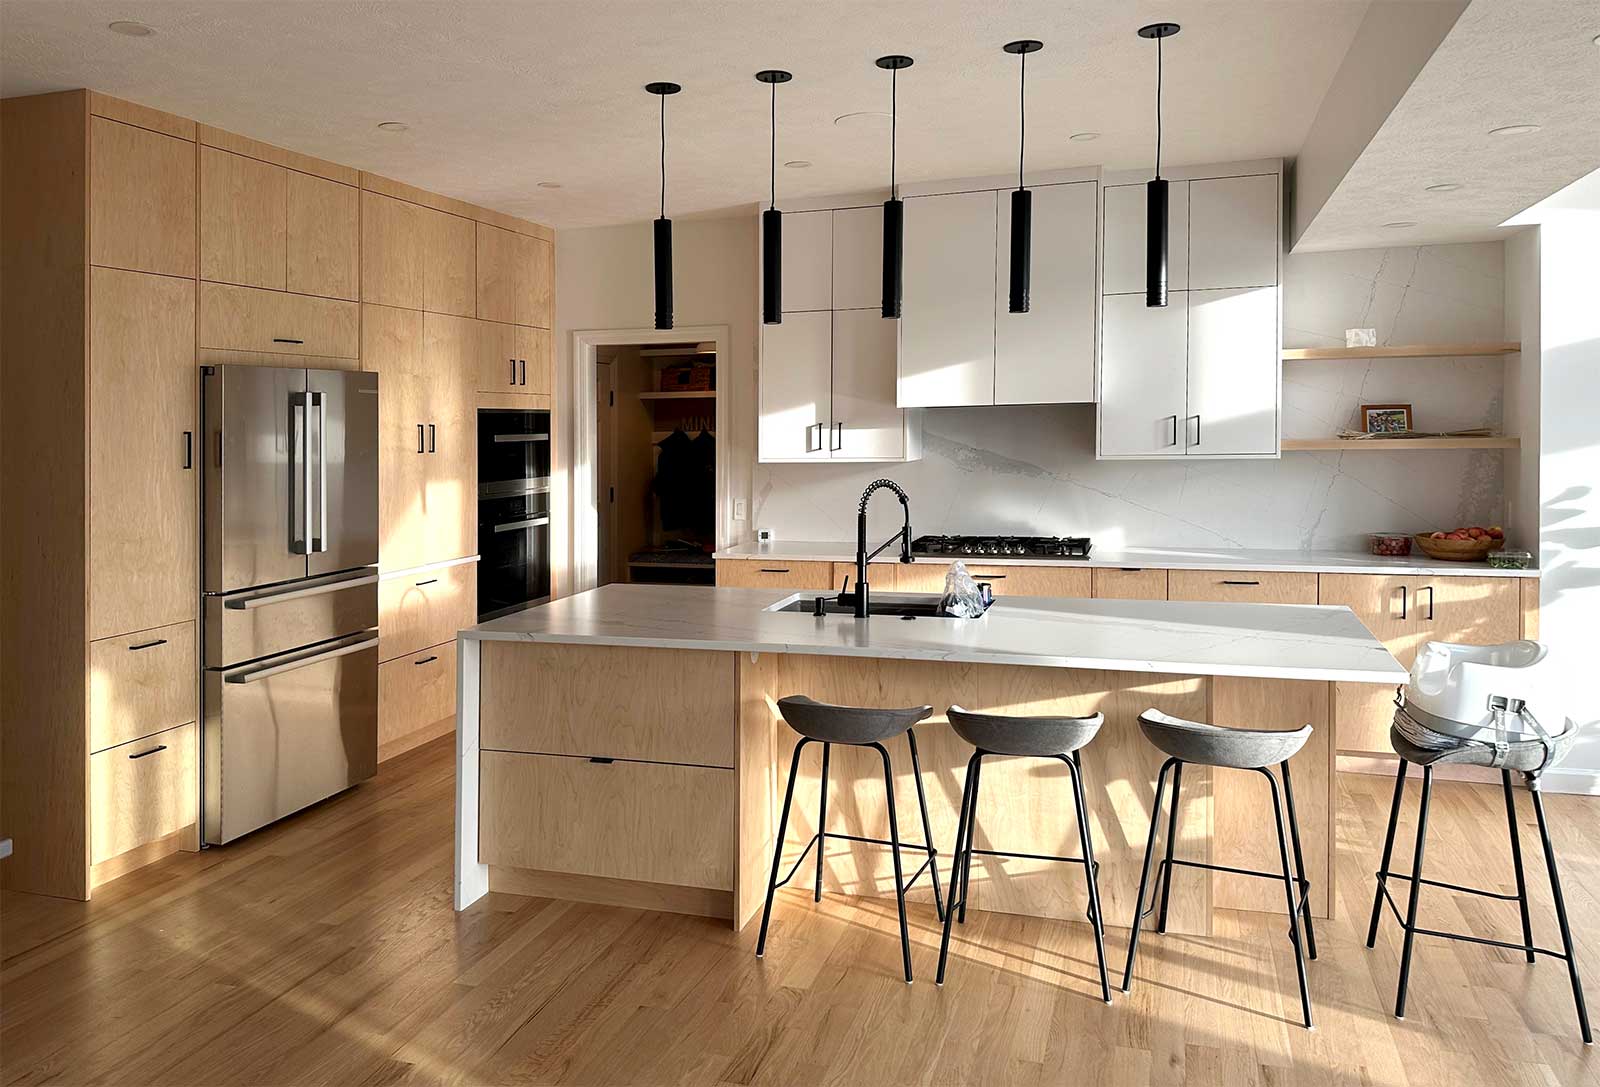 custom ikea cabinets in wood-toned modern kitchen design